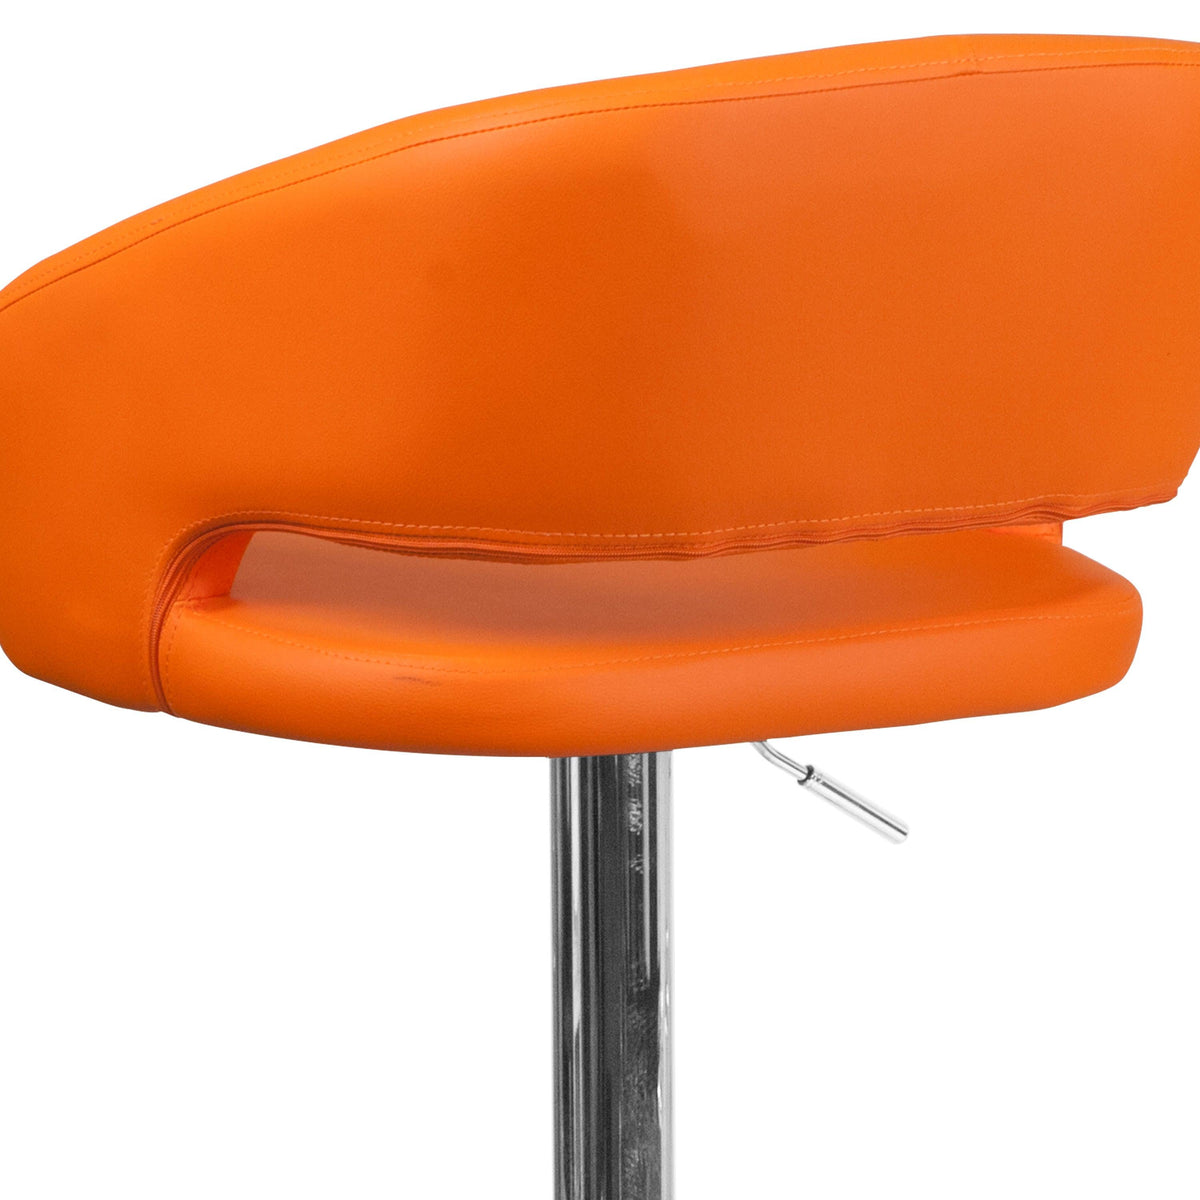 Orange Vinyl/Chrome Frame |#| Orange Vinyl Adjustable Height Barstool with Rounded Mid-Back and Chrome Base